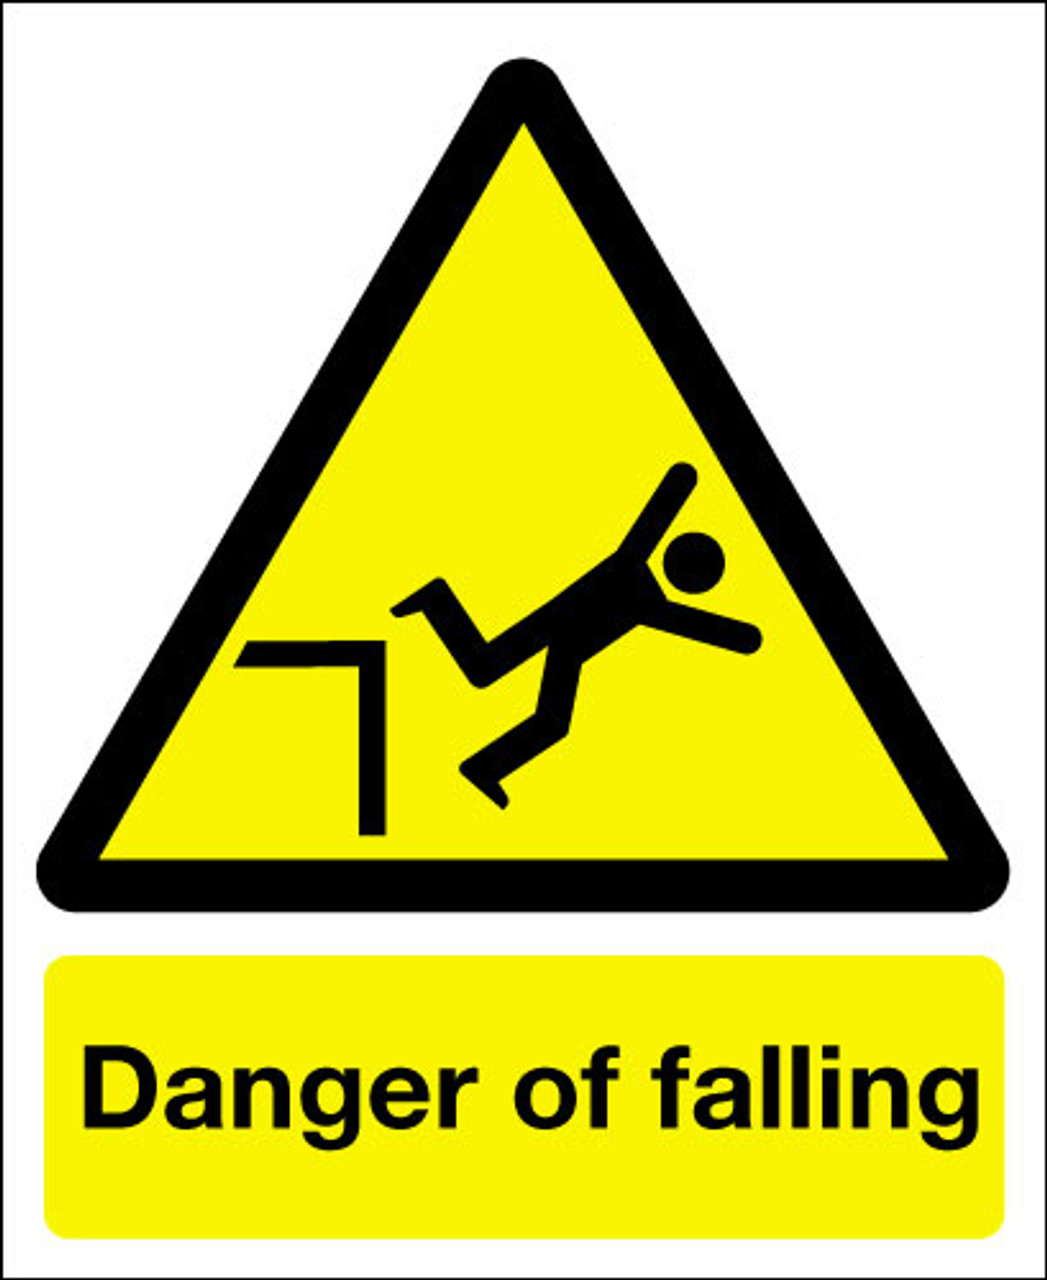 Danger of falling sign